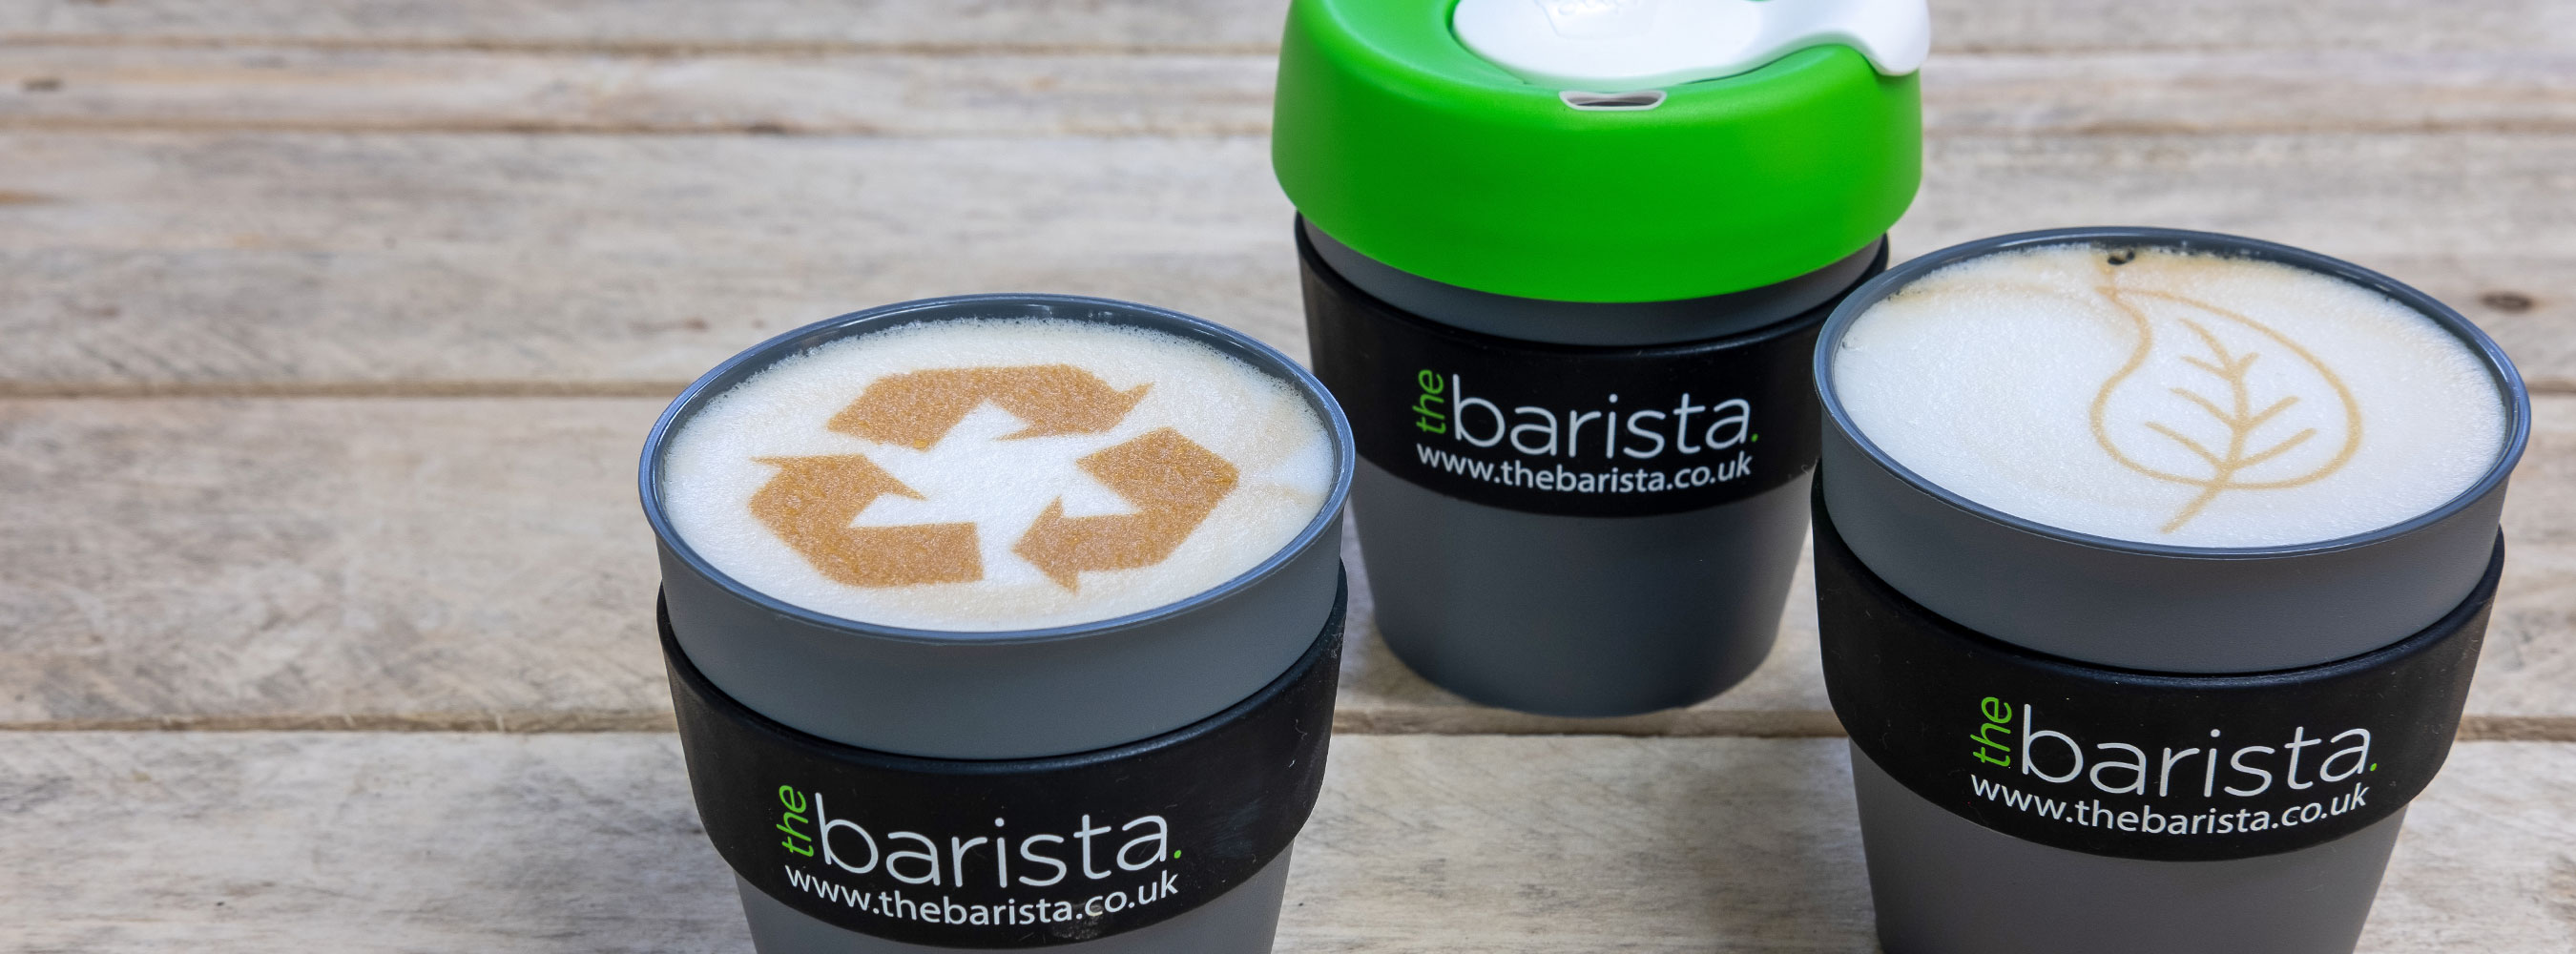 Barista-Sustainability-Coffee